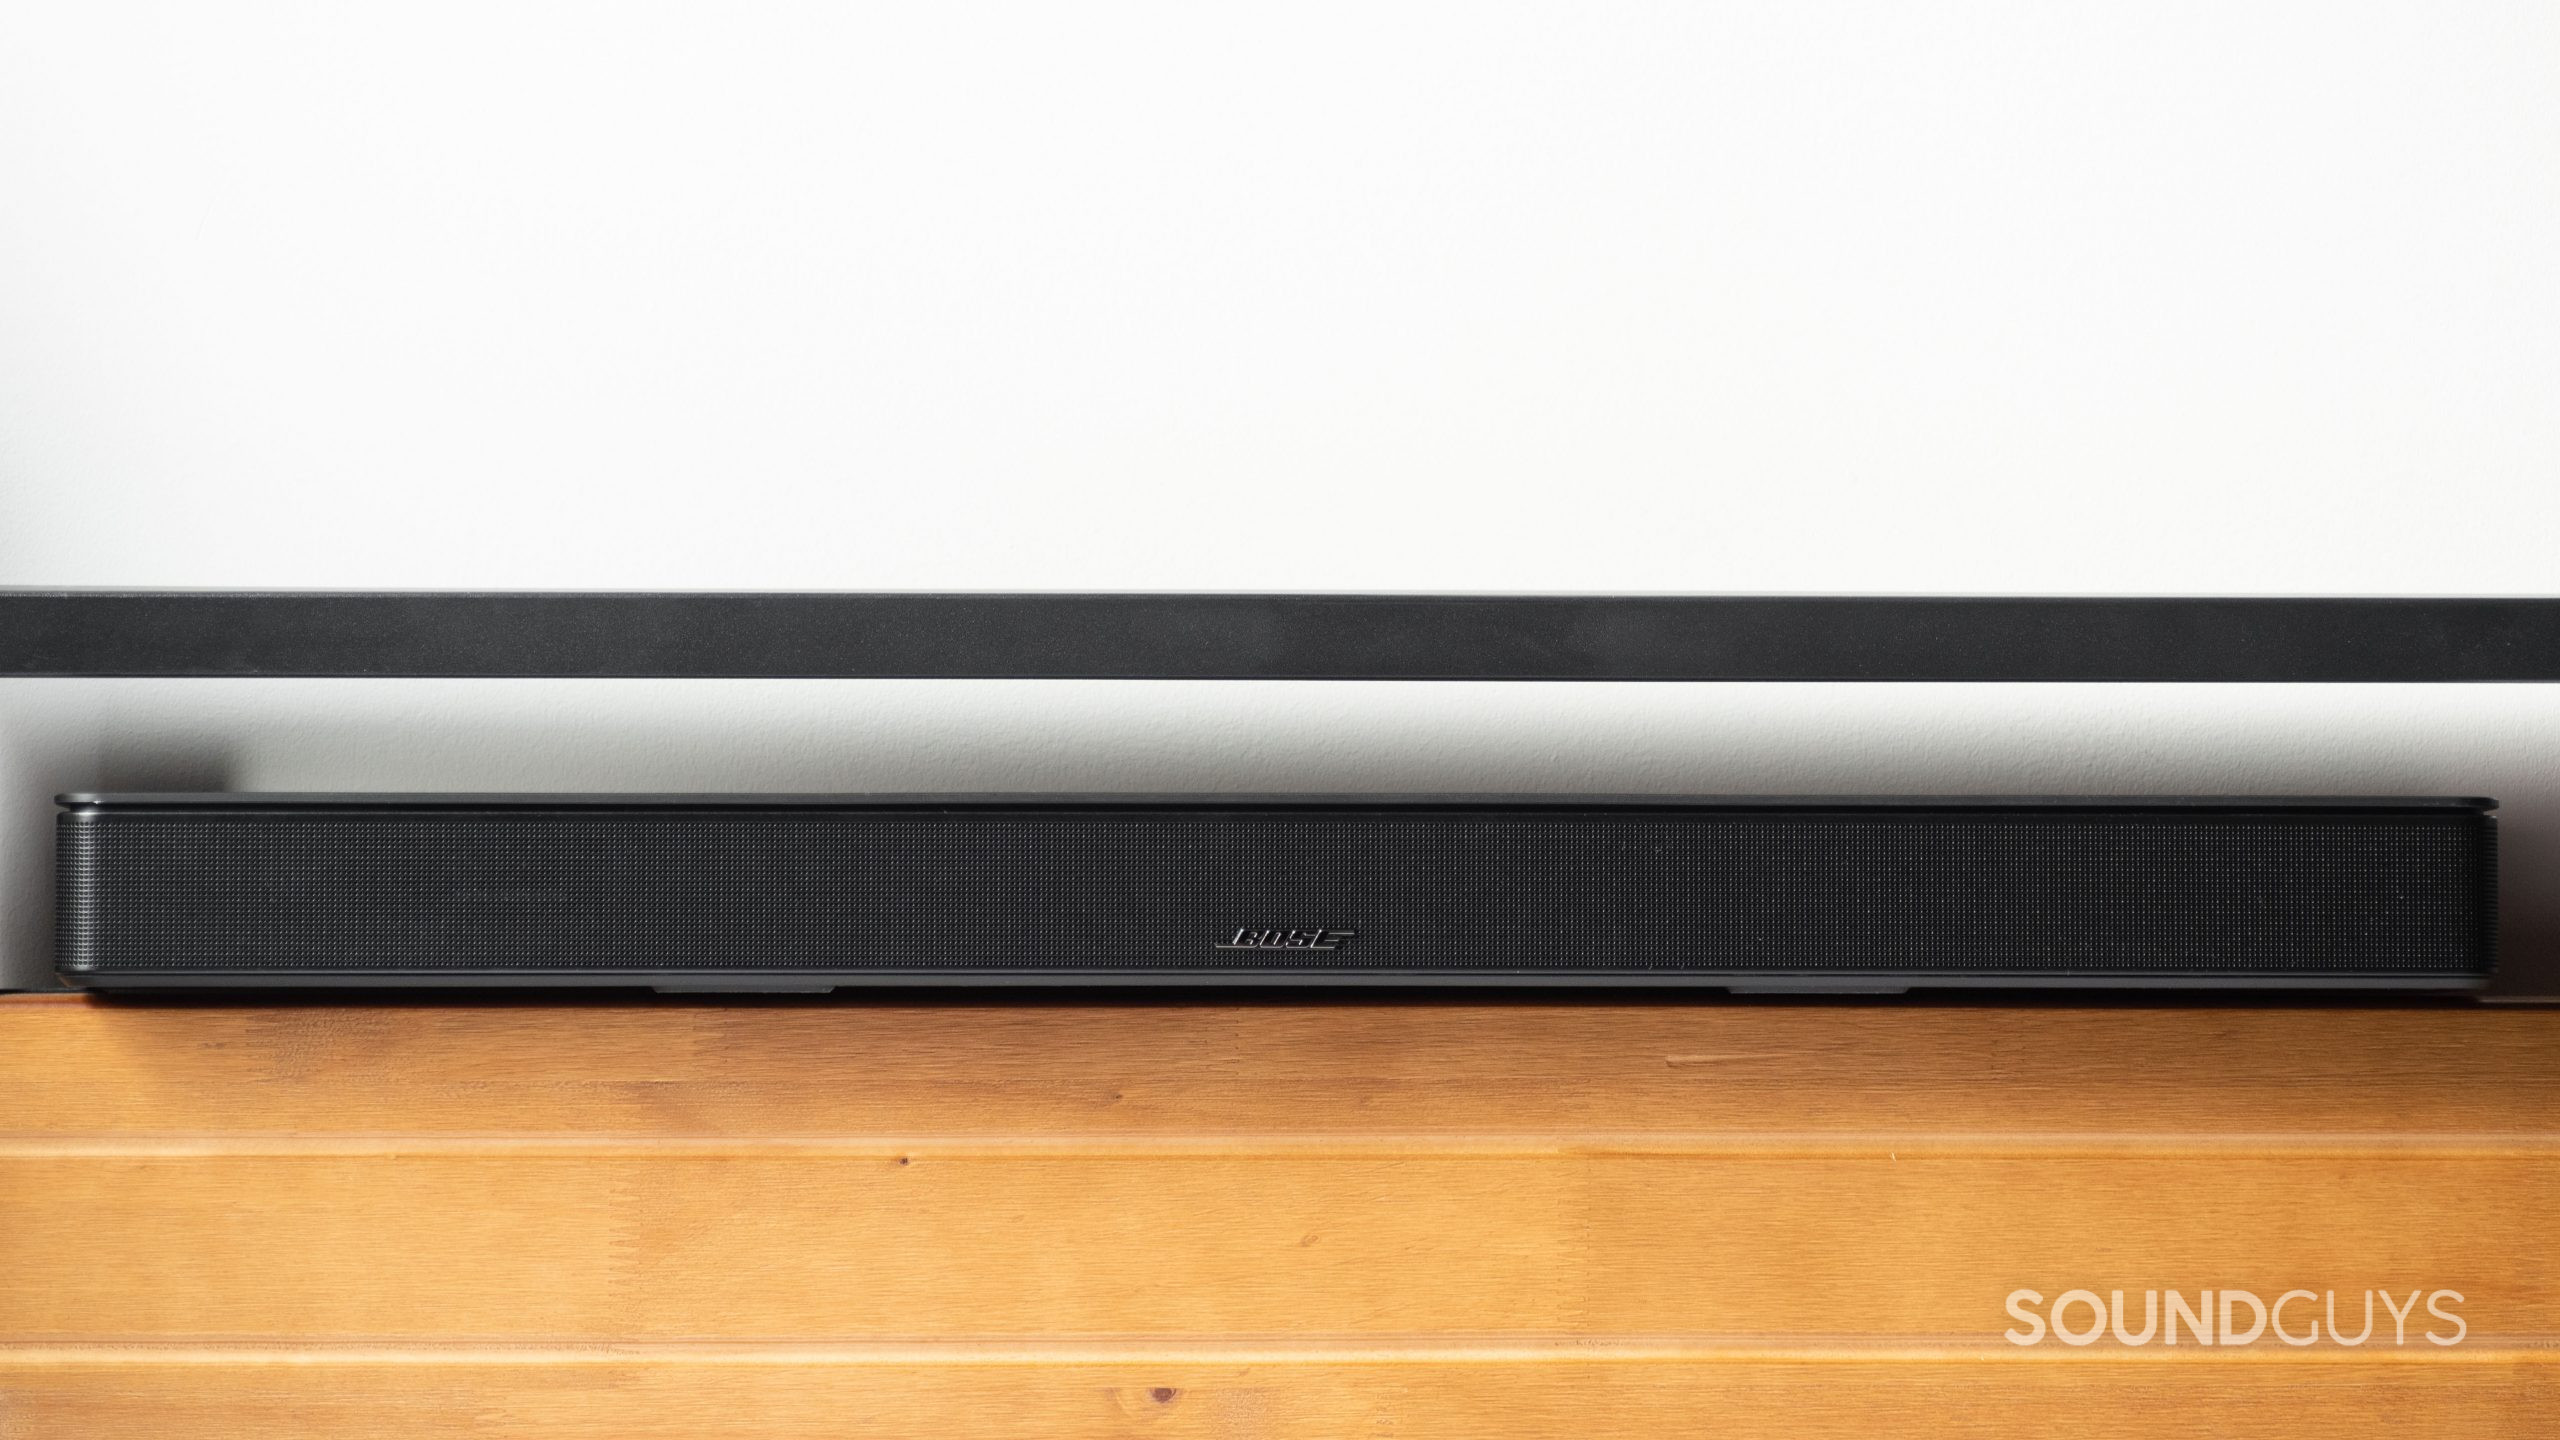 The Bose Smart Soundbar 600 rests on a wooden surface.